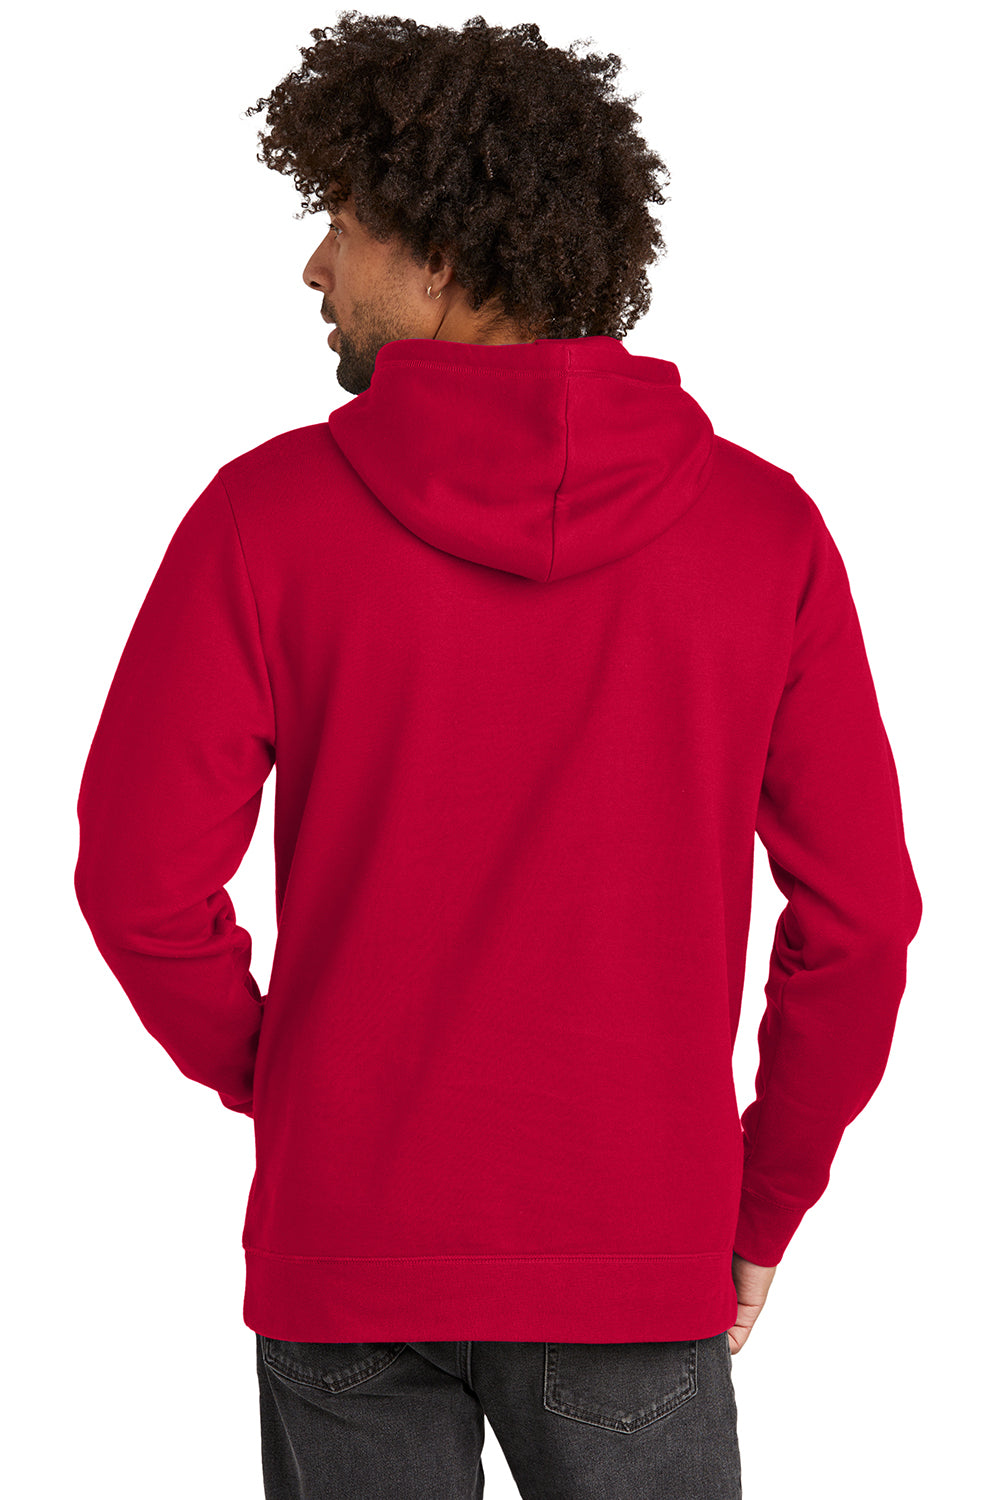 New Era NEA550 Mens Comeback Fleece Hooded Sweatshirt Hoodie Scarlet Red Back